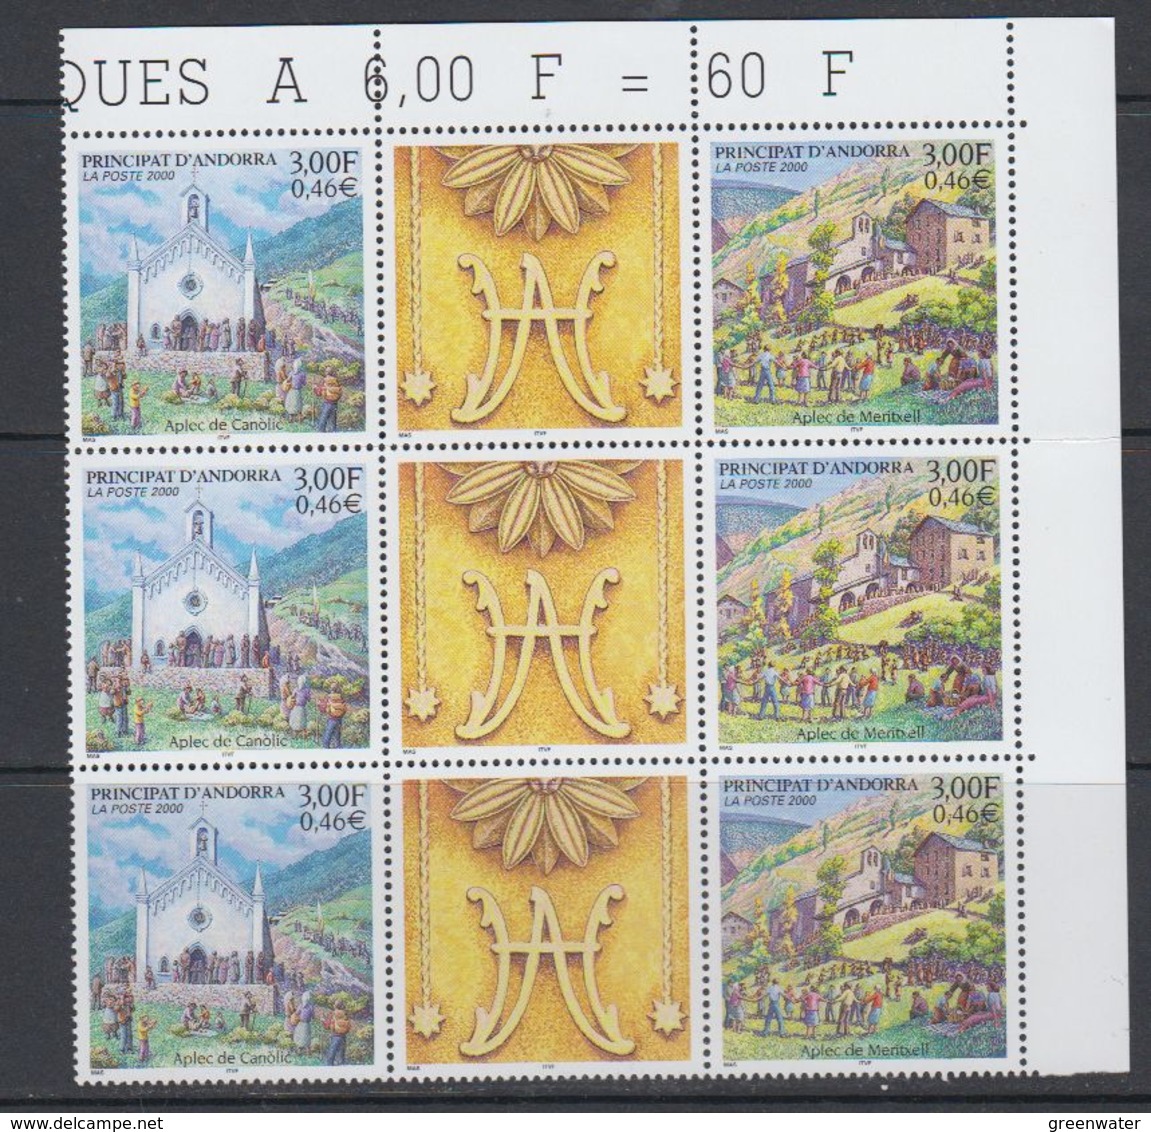 Andorra Fr 2000 Canolic & Meritxell Celebration Strip 2v + Label (3x) ** Mnh (40647N) - Unused Stamps